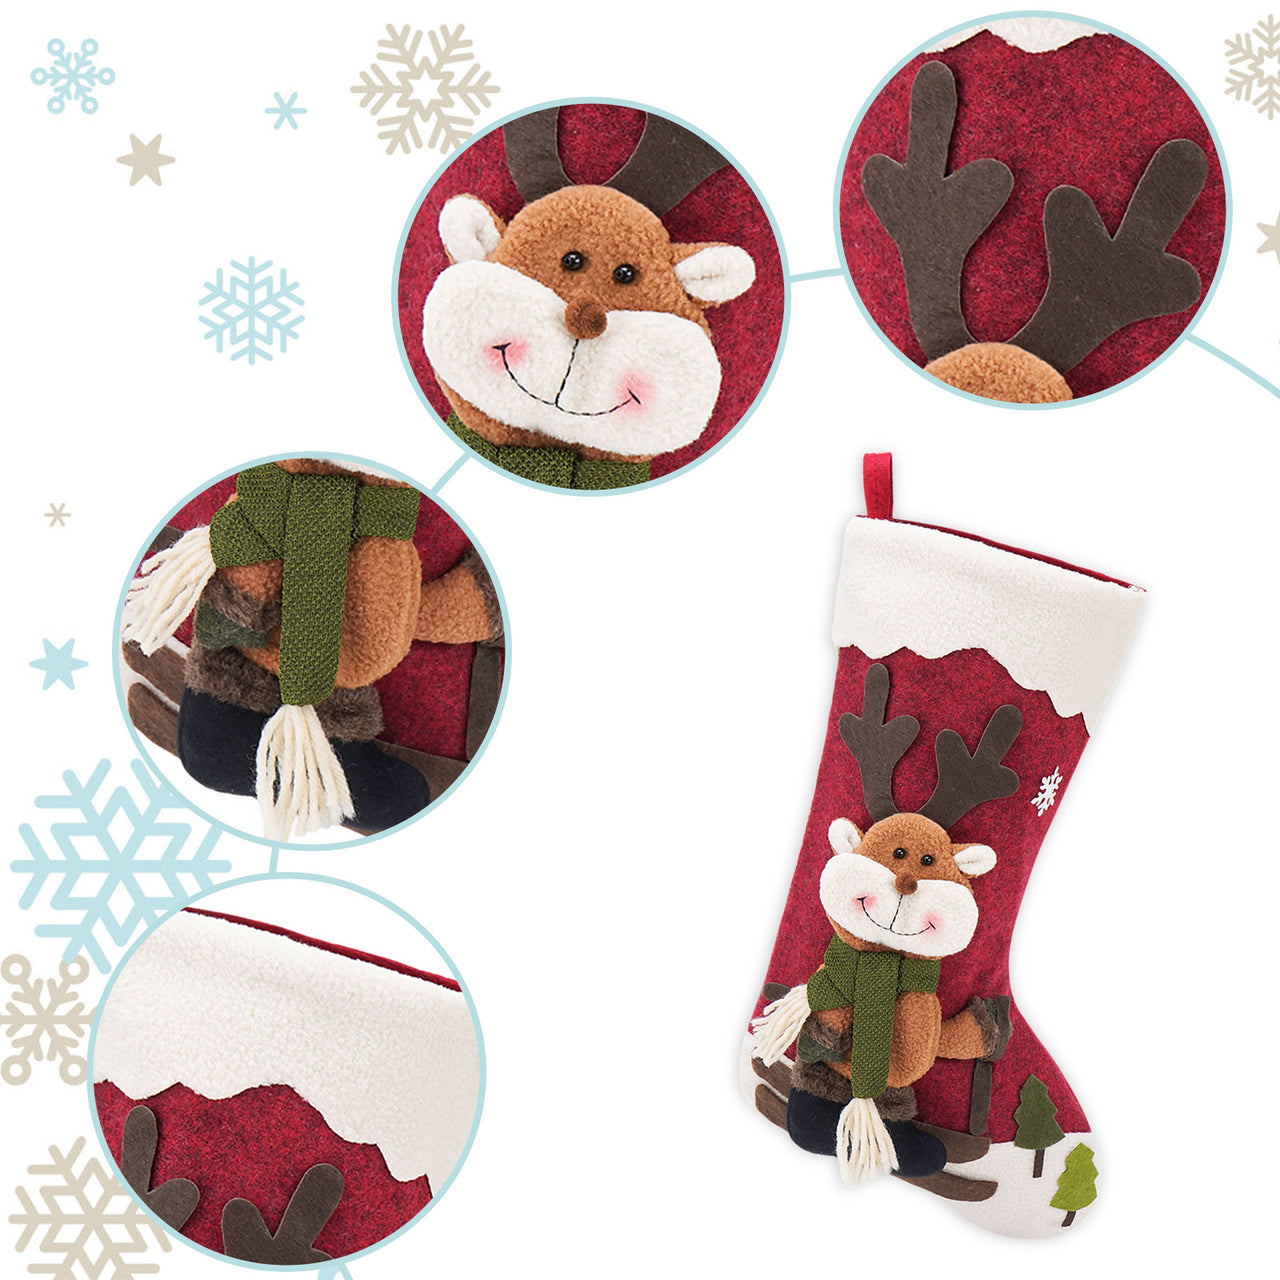 Santa Claus Snowman Elk Holiday Stocking Gift Bag Decorations